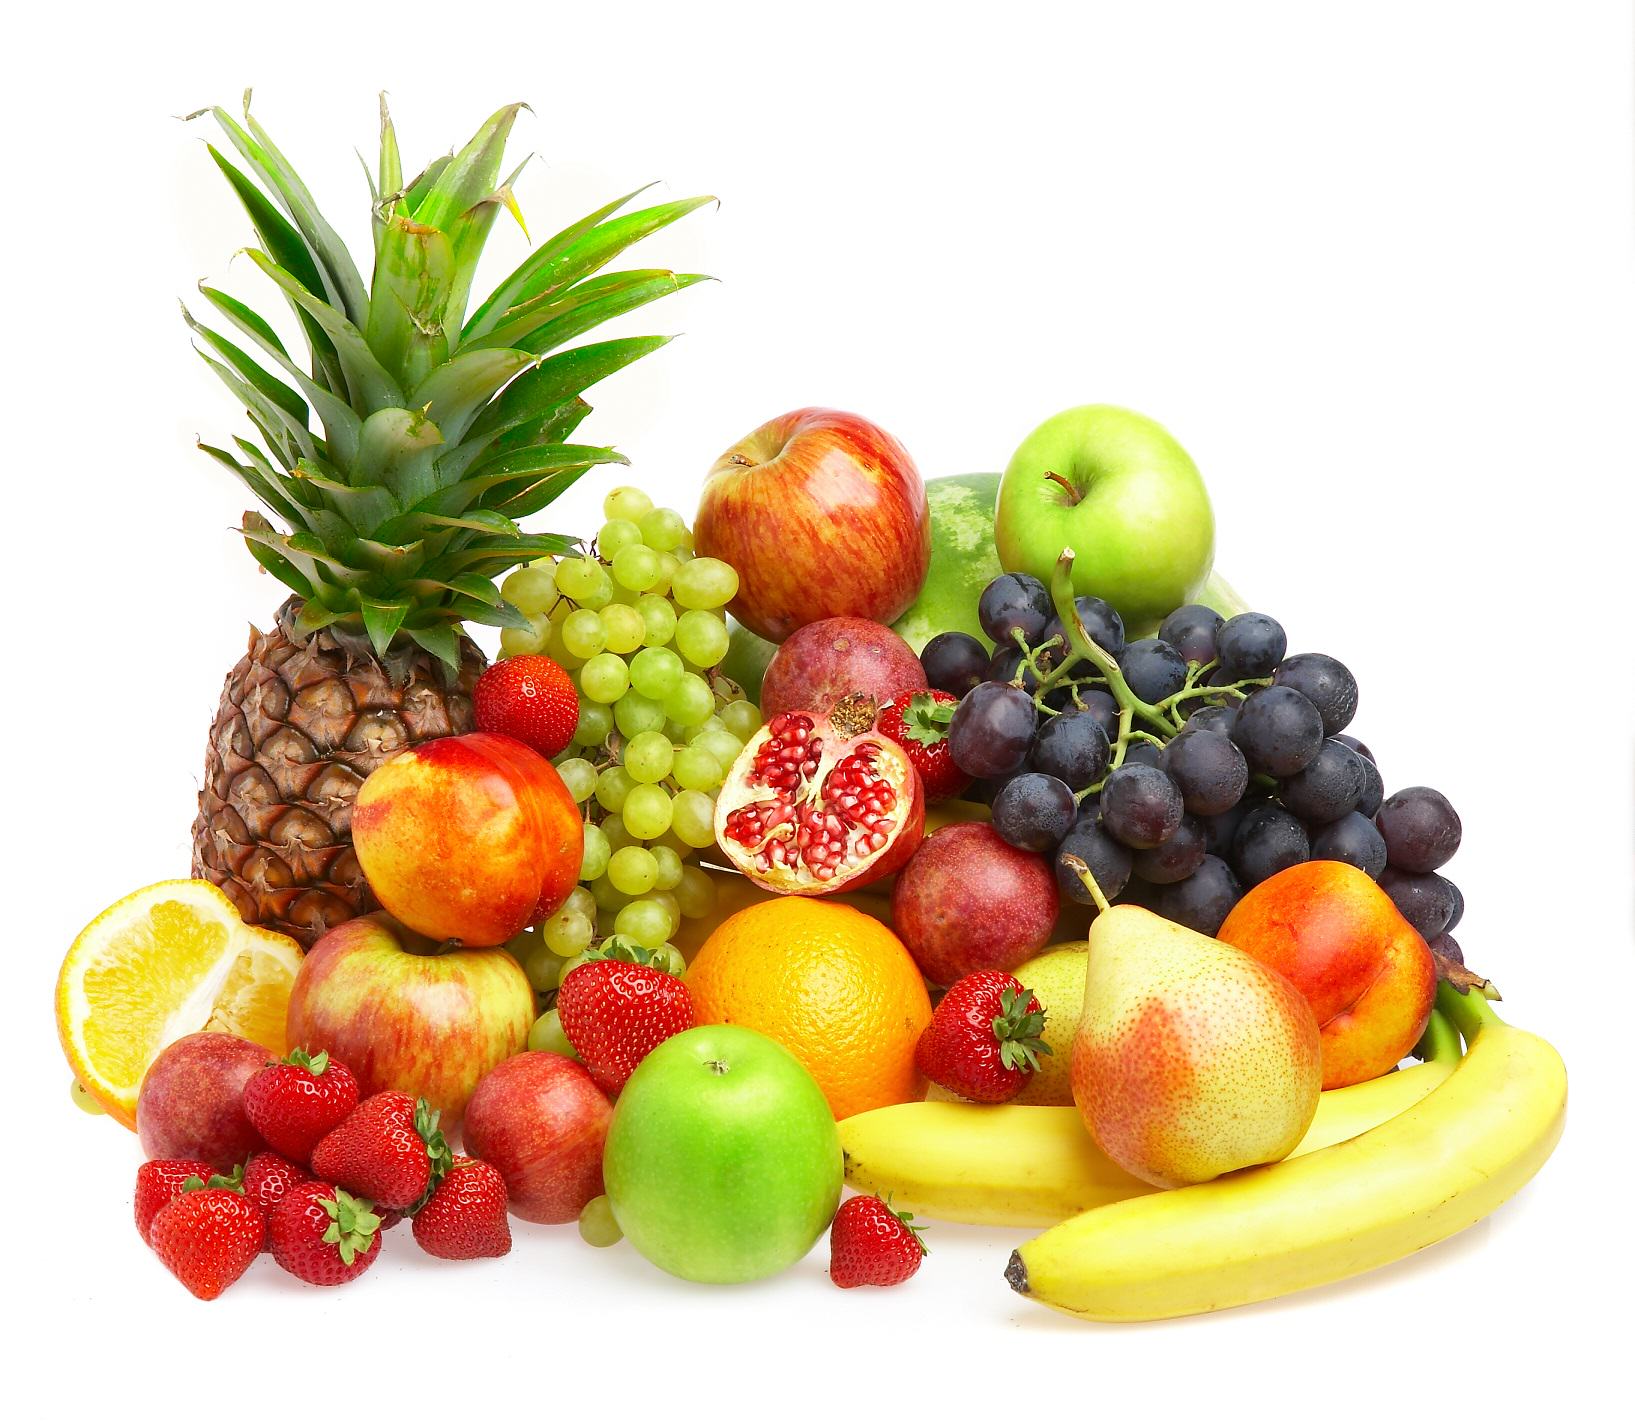 http://www.alchimiaweb.com/blogfr/wp-content/uploads/2013/03/glucides-vitamines-fruits.jpg